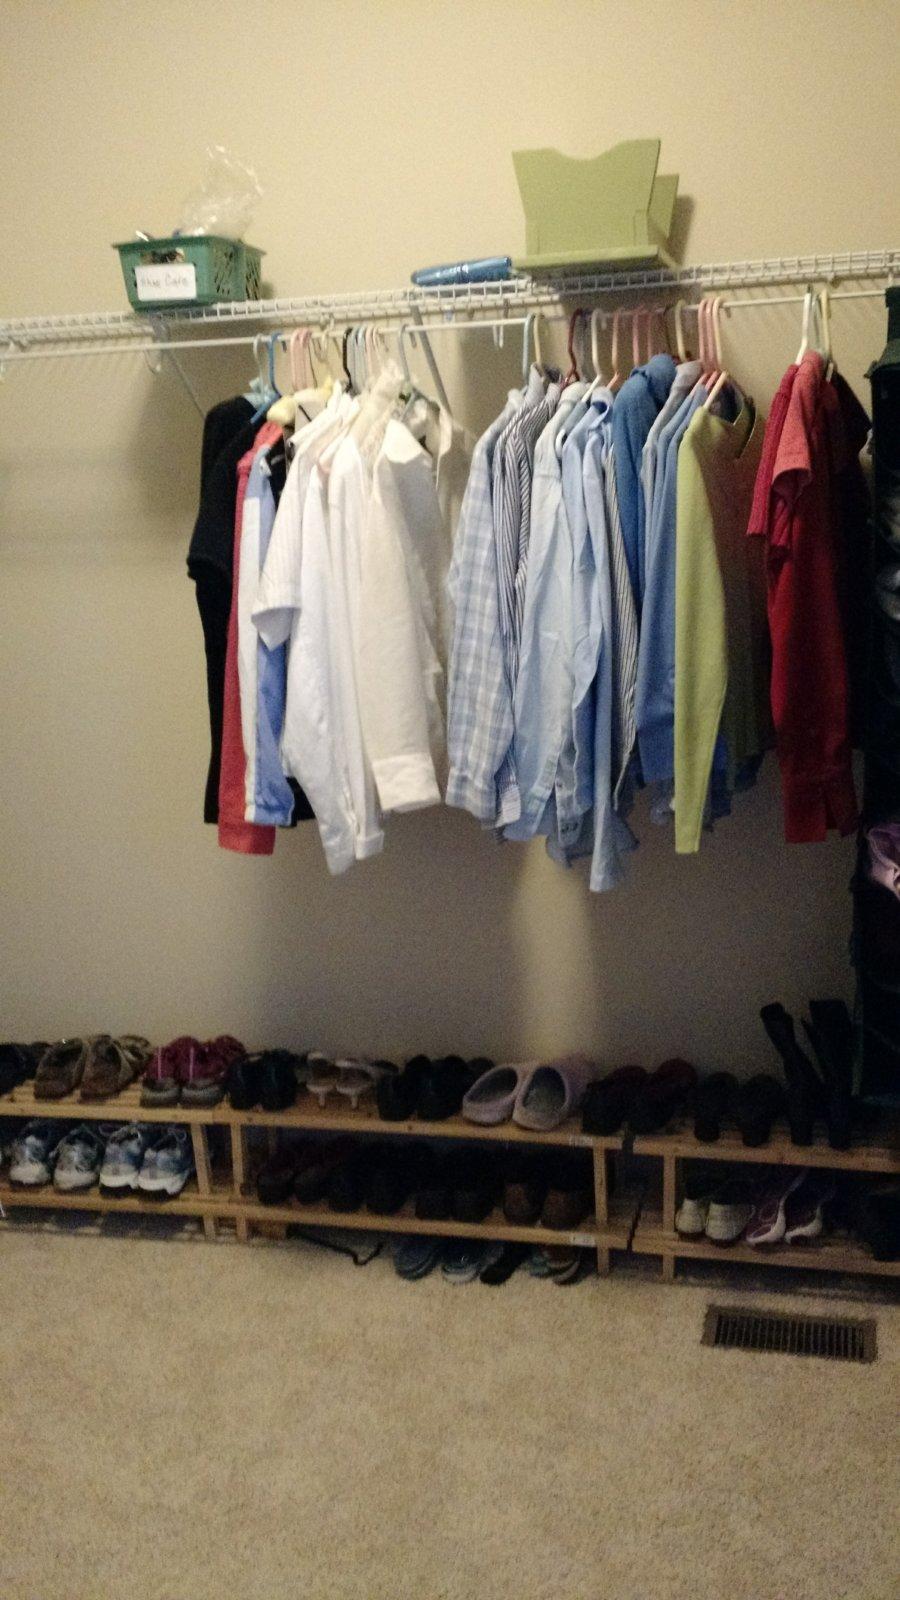 Mom's closet ready to go.